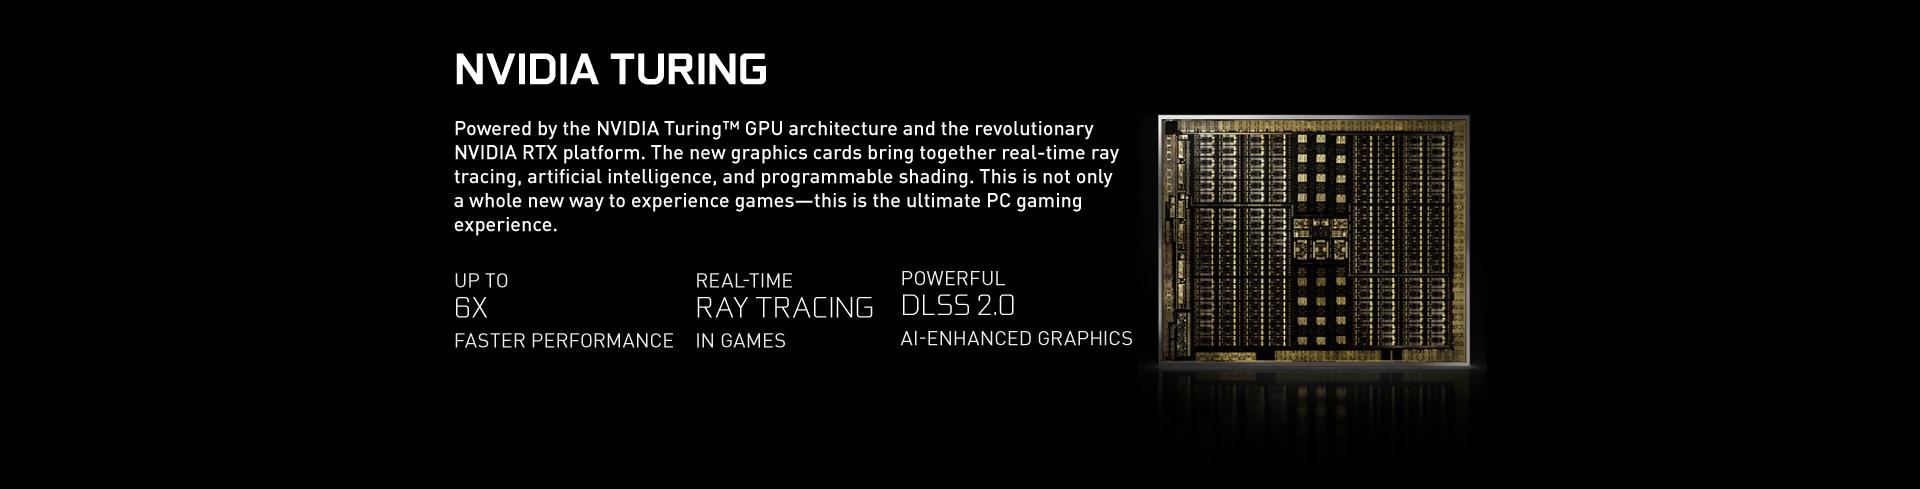 Inno3d GeForce RTX 2060 12GB Twin X2 OC 192-Bit GDDR6 DirectX 12 12G PCI Express 3.0 x16 HDCP Ready Video Gaming Graphics Card